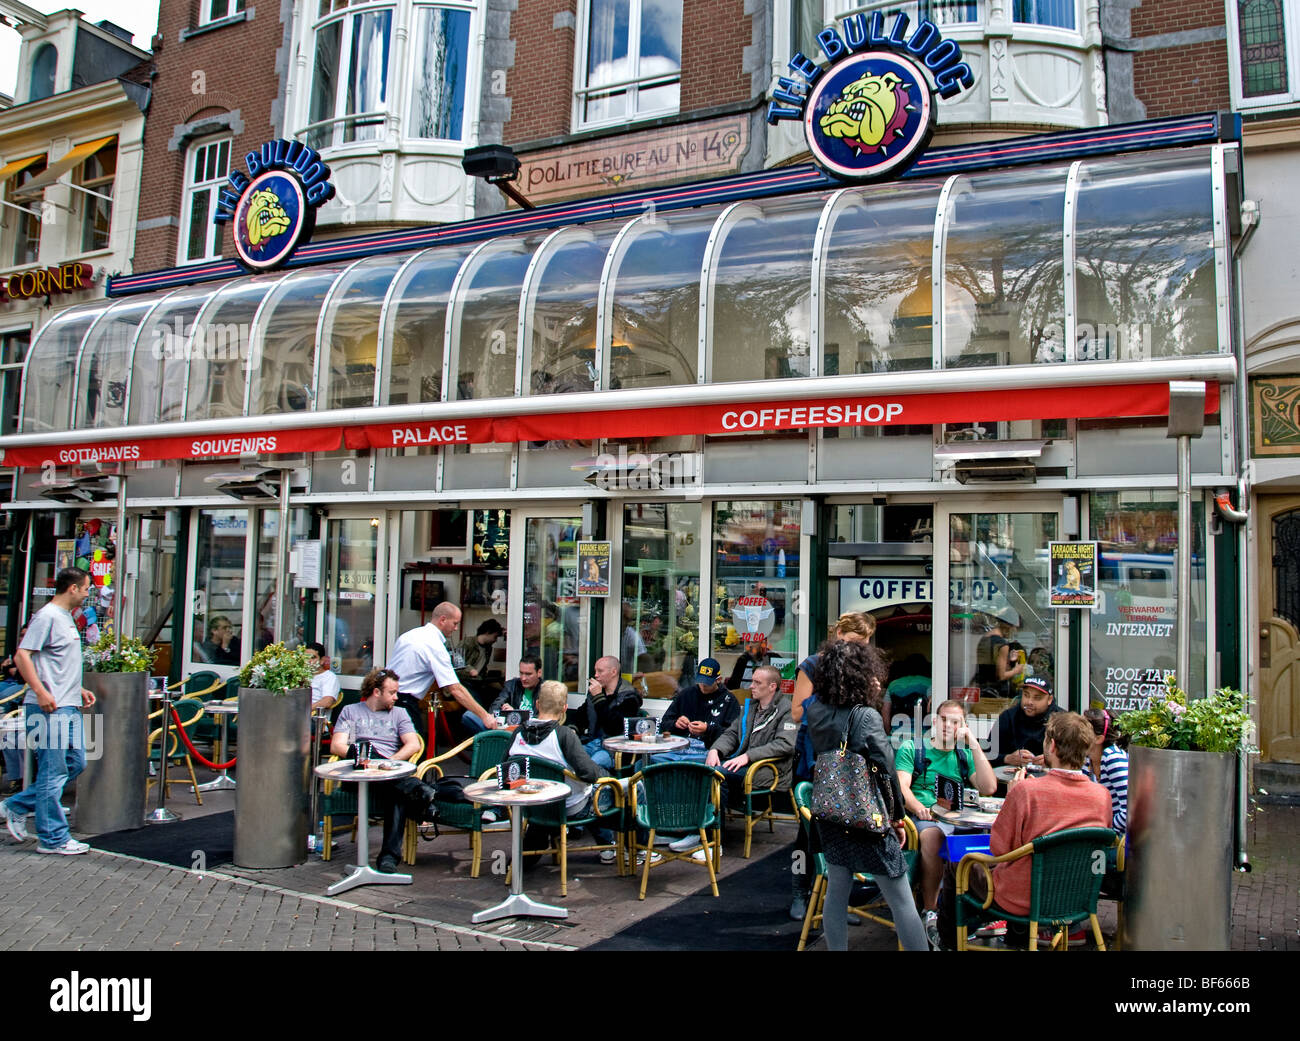 Bulldog coffeeshop amsterdam hi-res stock photography and images